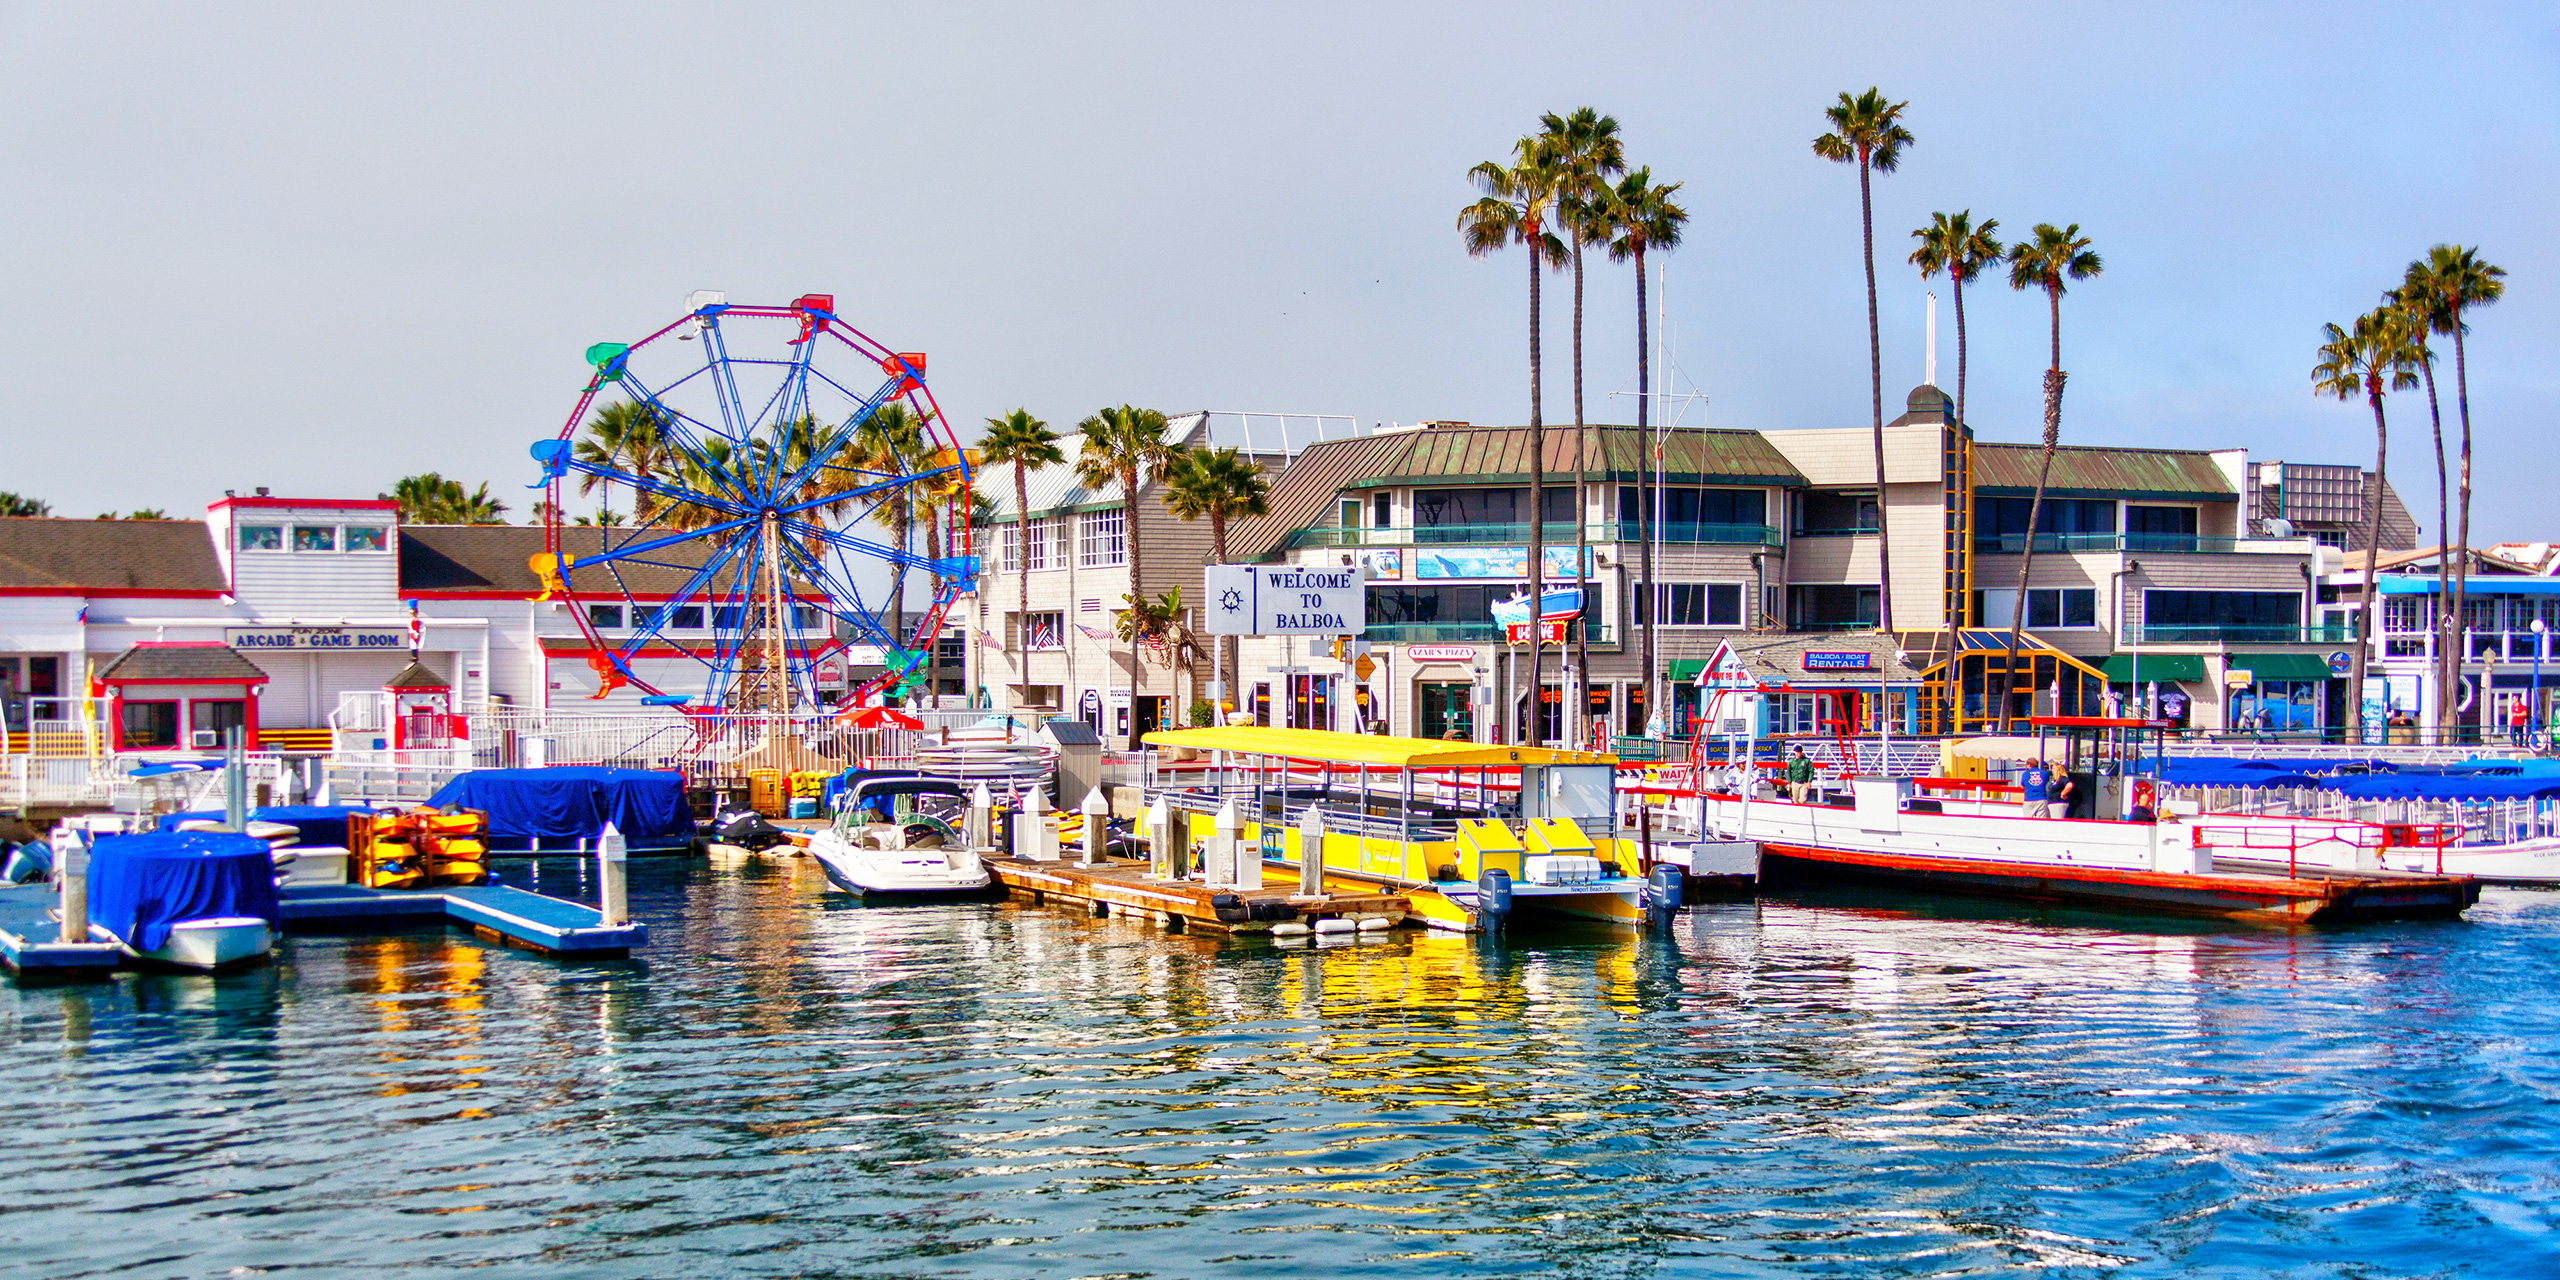 10 Best Beaches Near Disneyland 2020